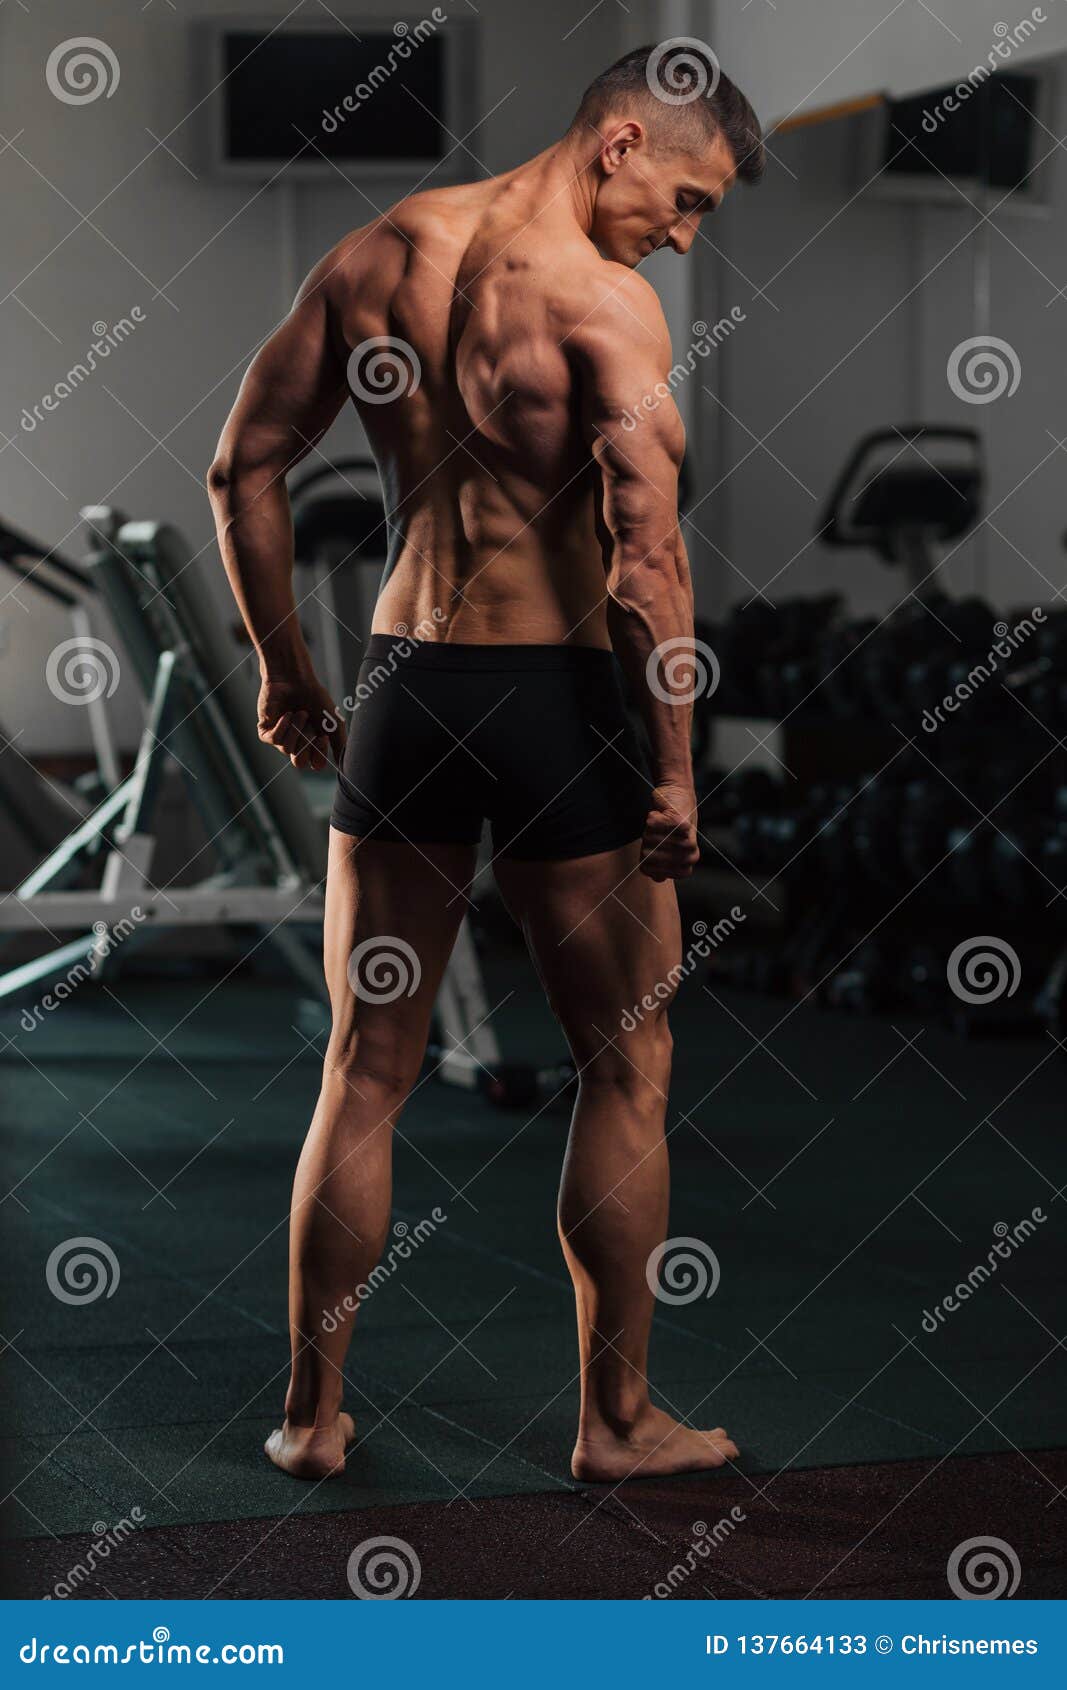 Upper back muscular pose | Fitness transformation journey